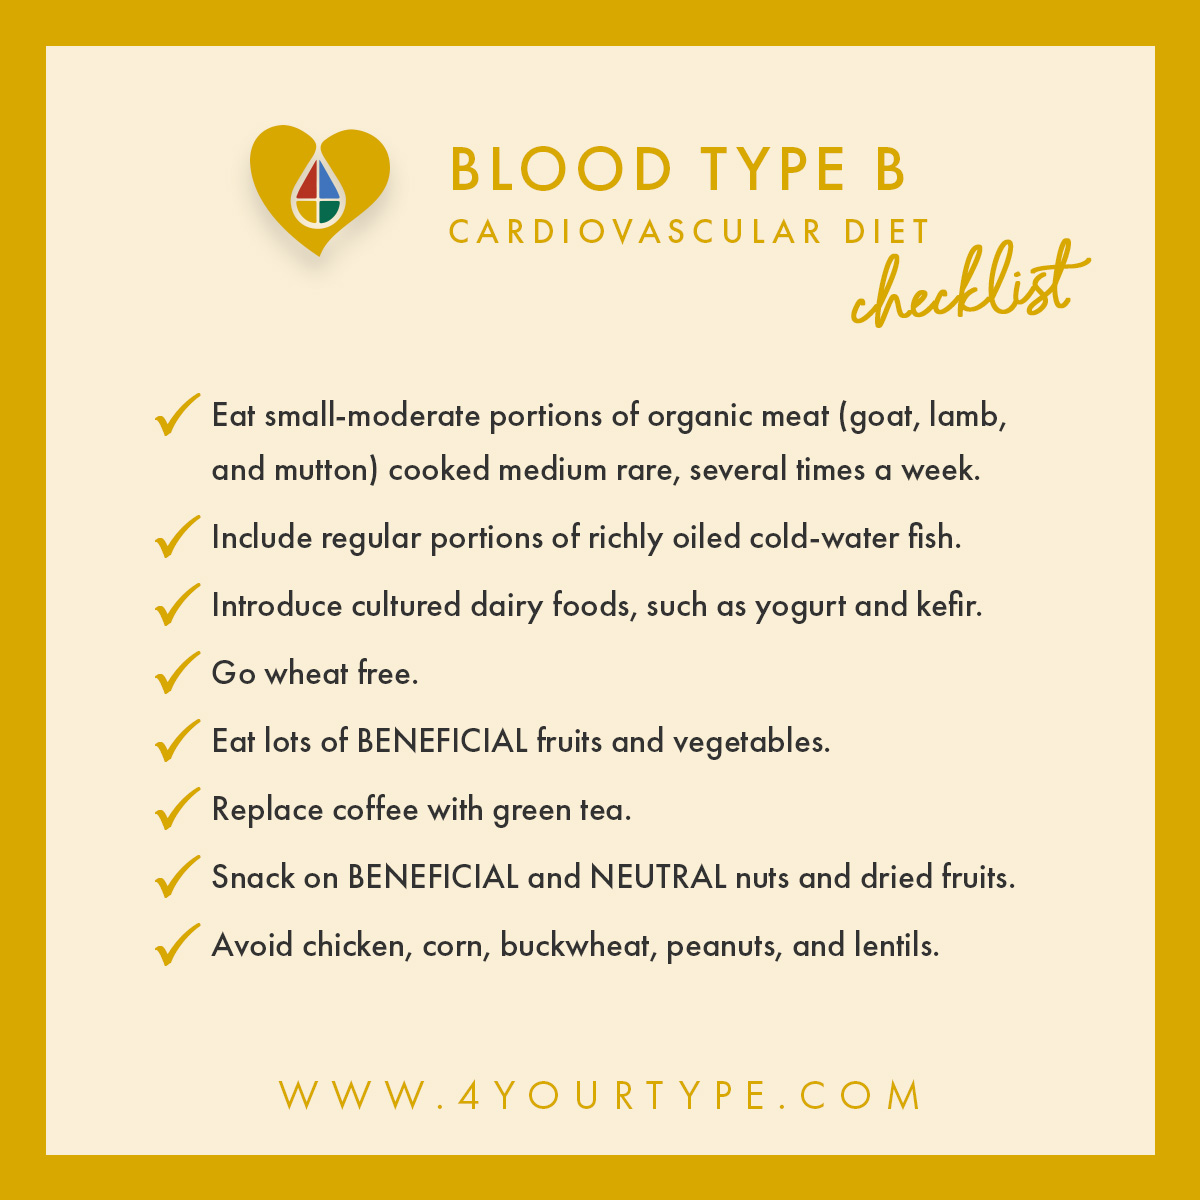 Heart healthy foods blood type checklist B